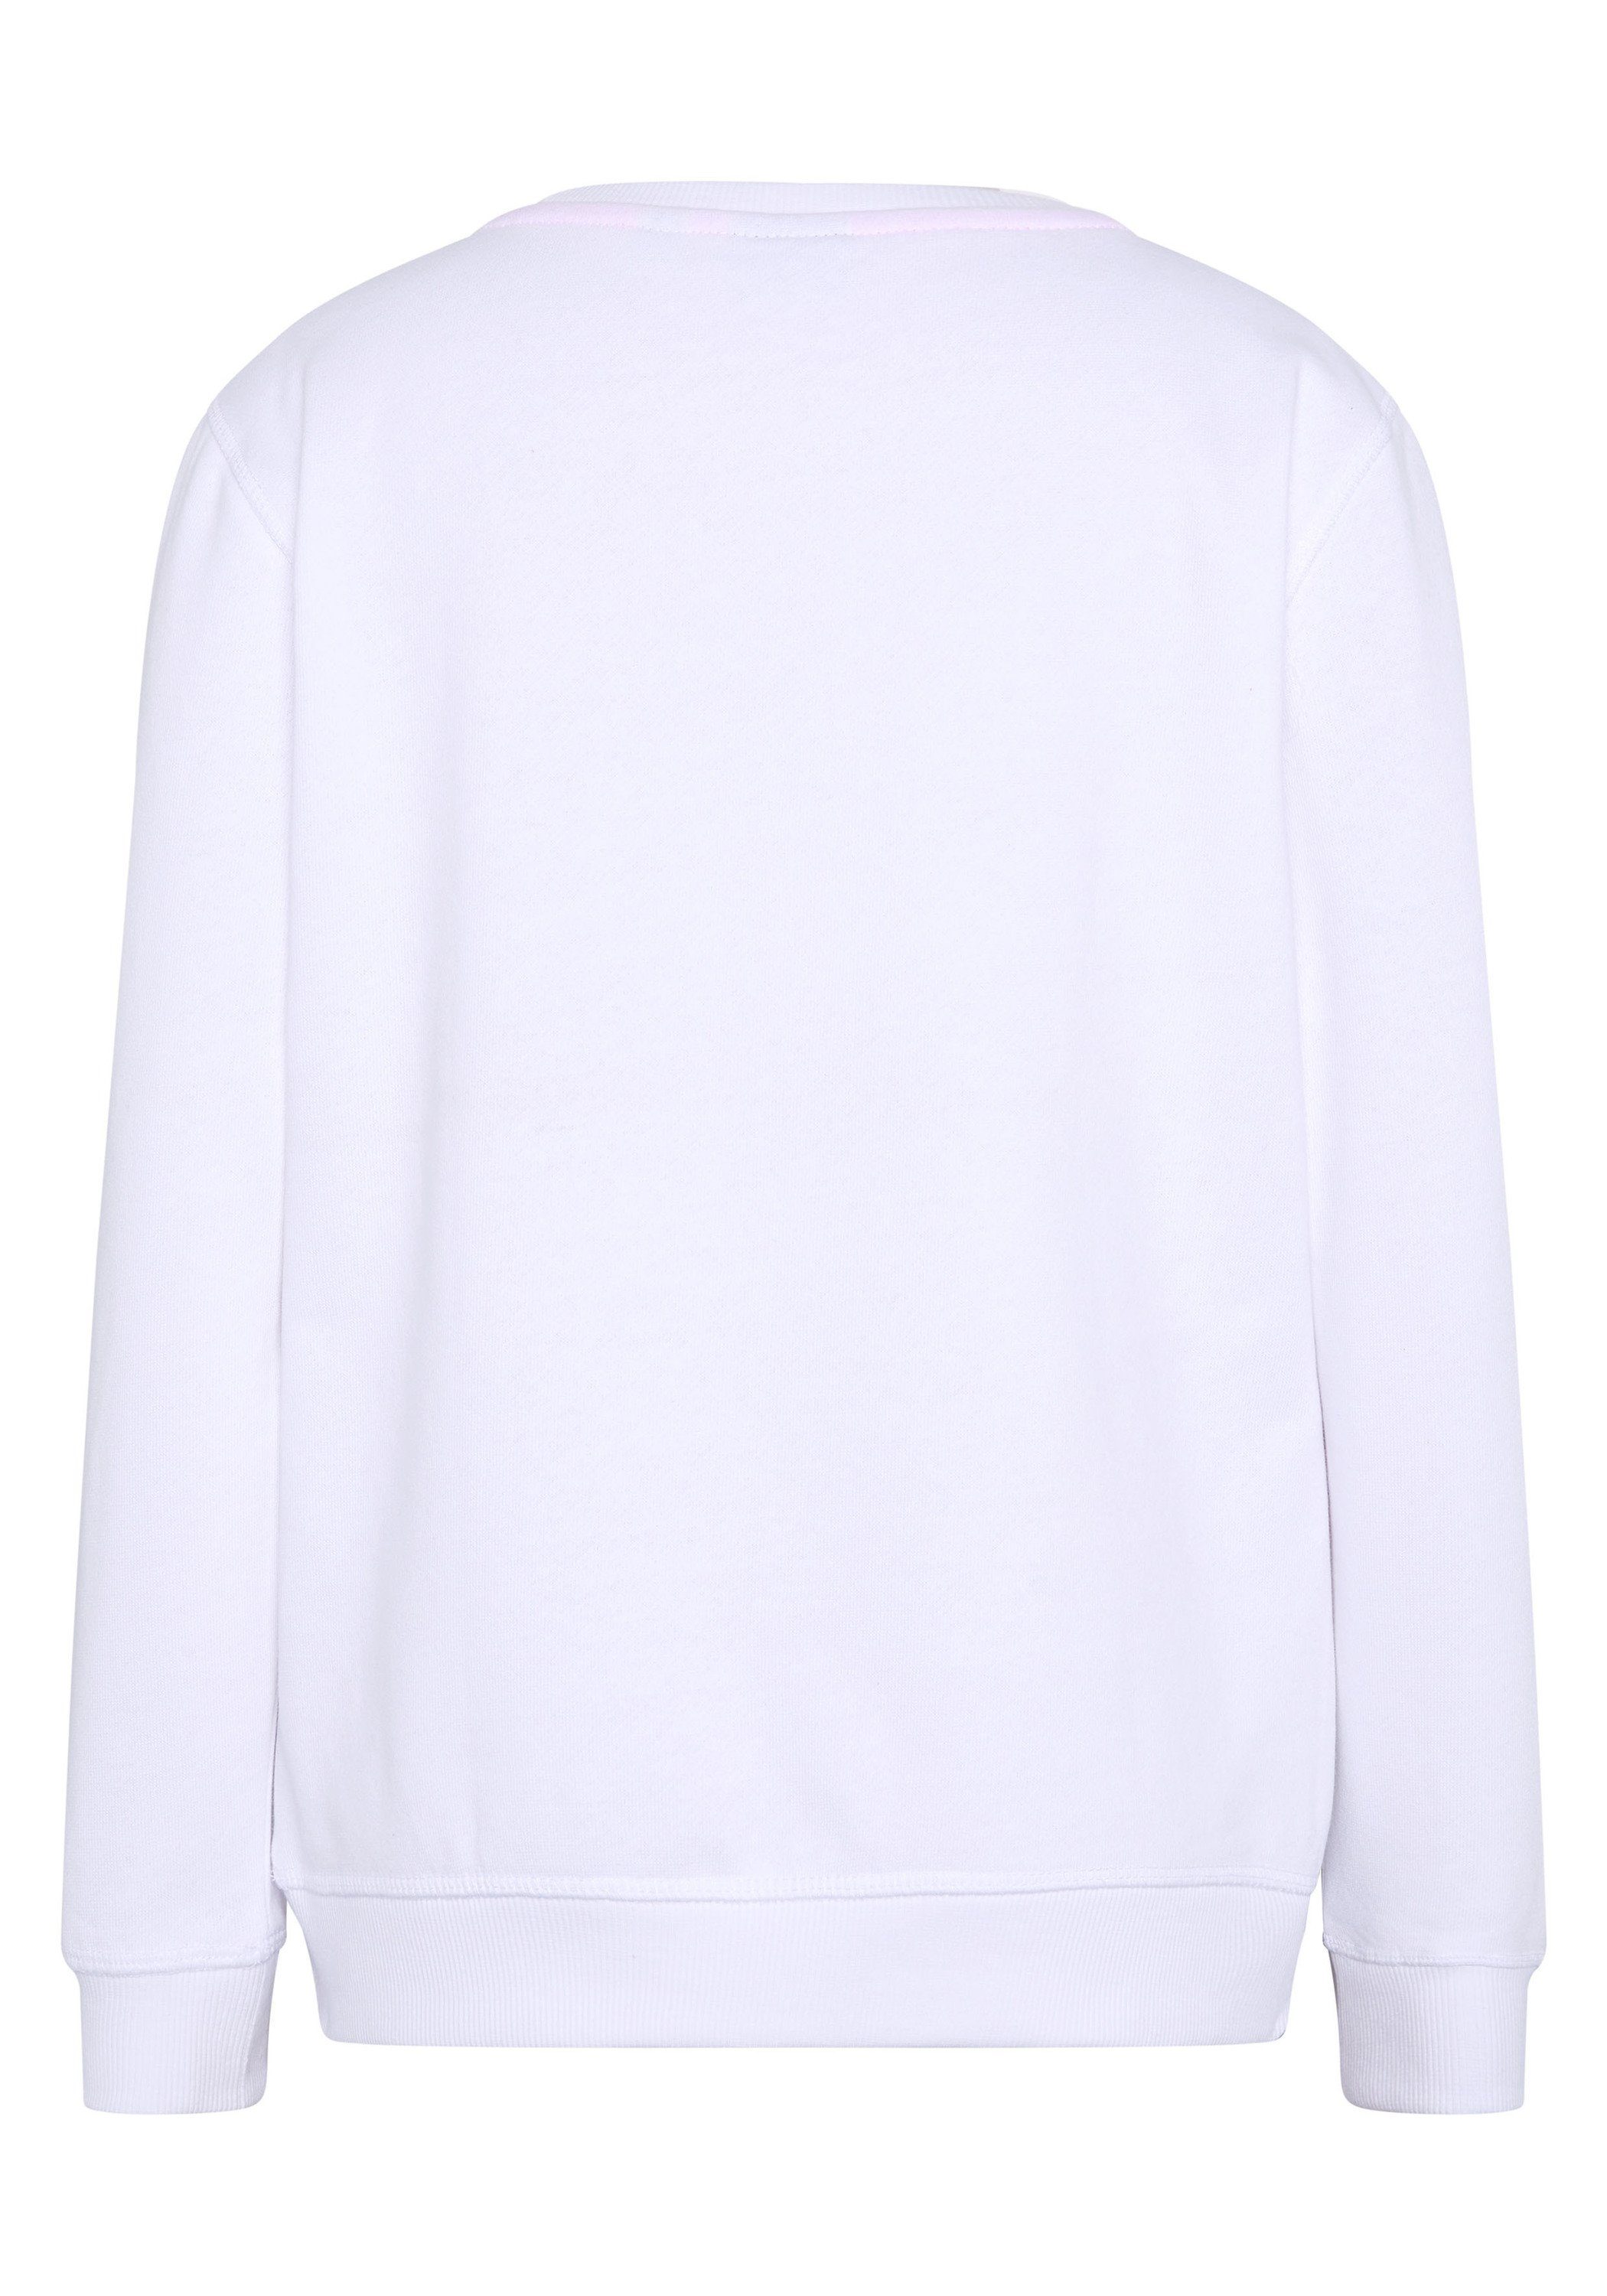 Polo mit Bright Logodesign floralem Sweatshirt 11-0601 Sylt White